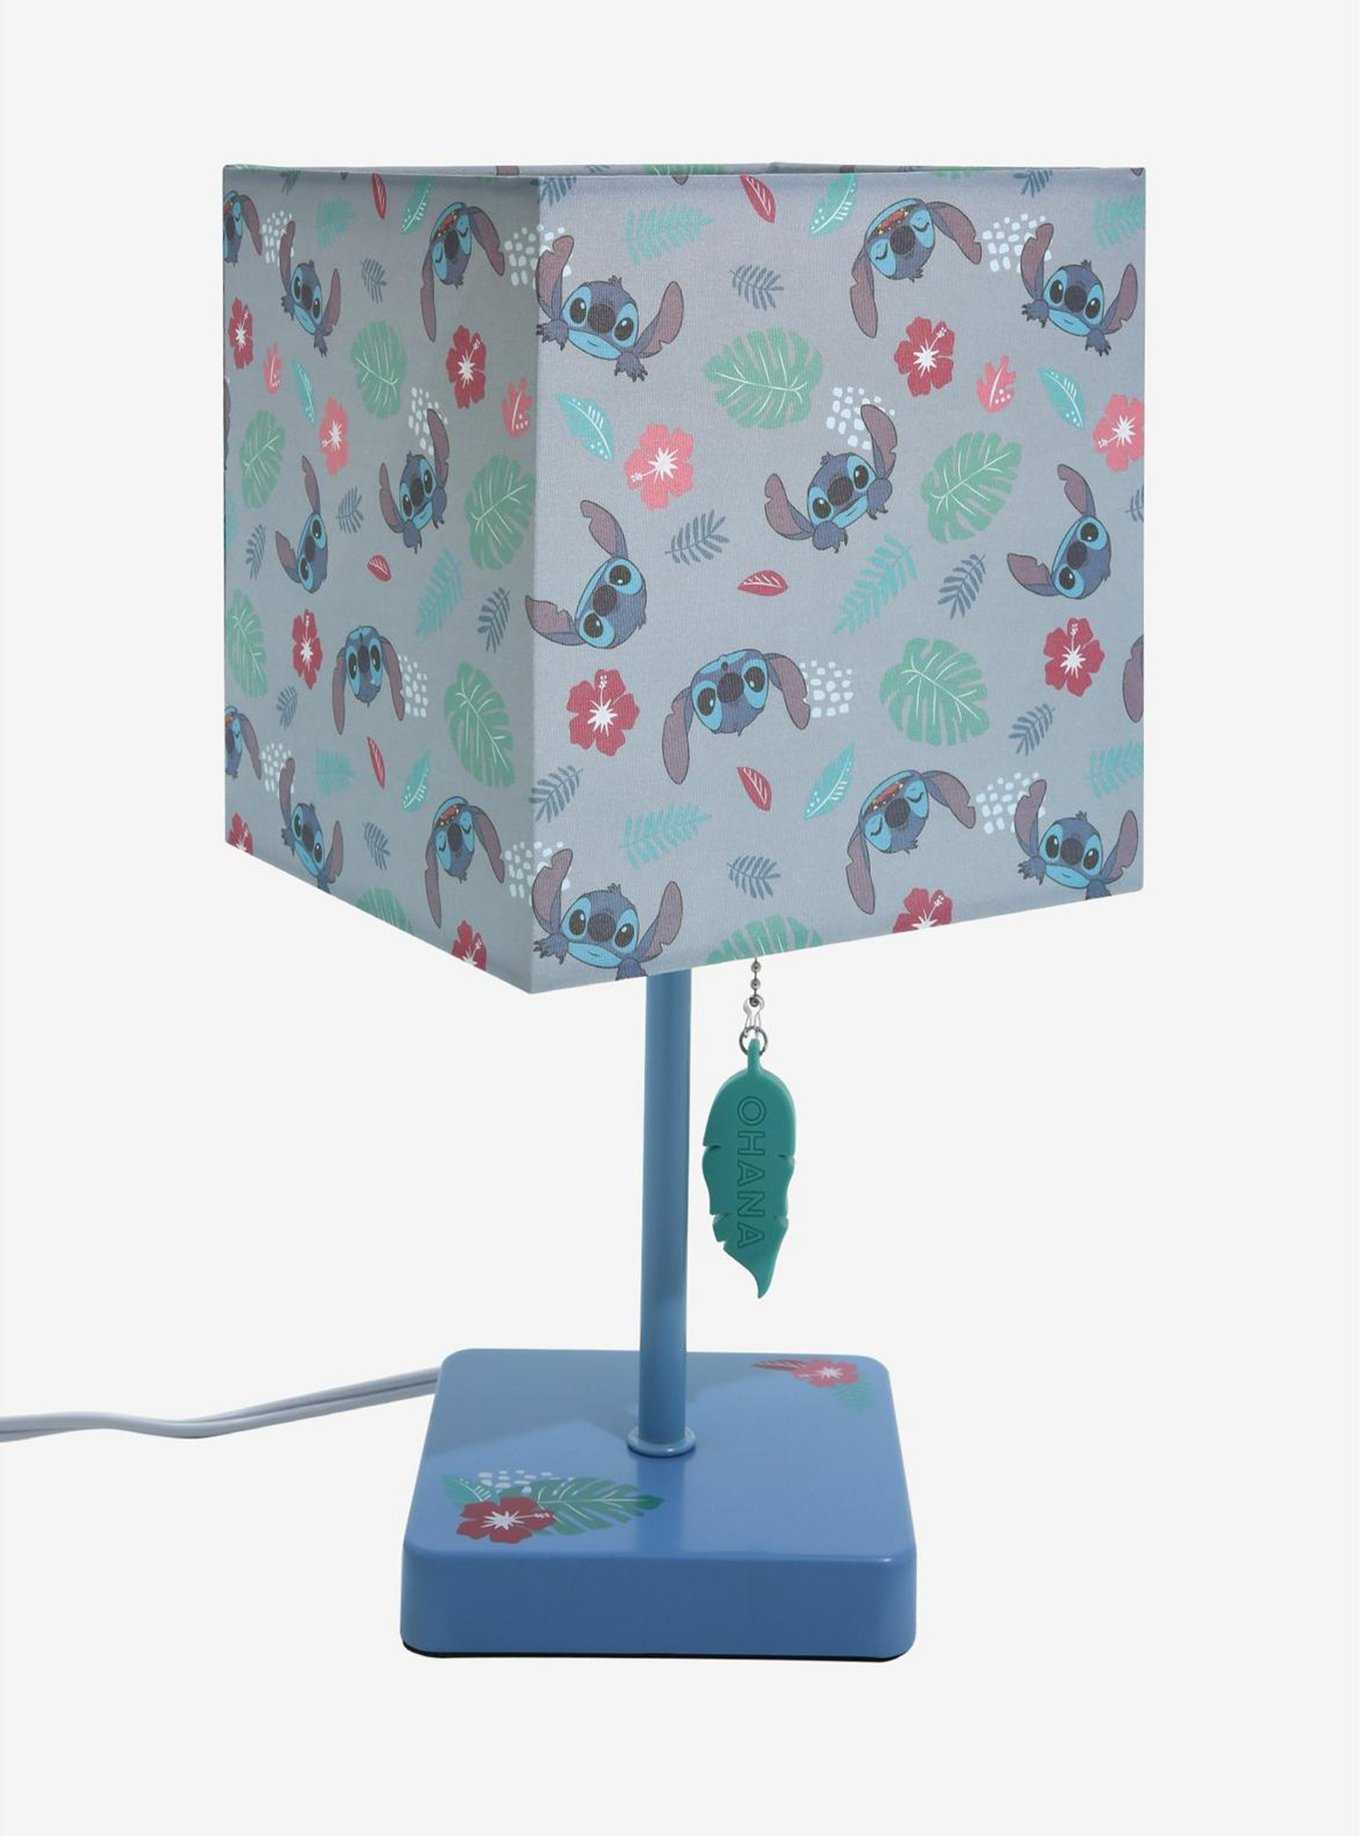 Stitch Nightlight, Lilo and Stitch, Personalized Lamp, Disneyland